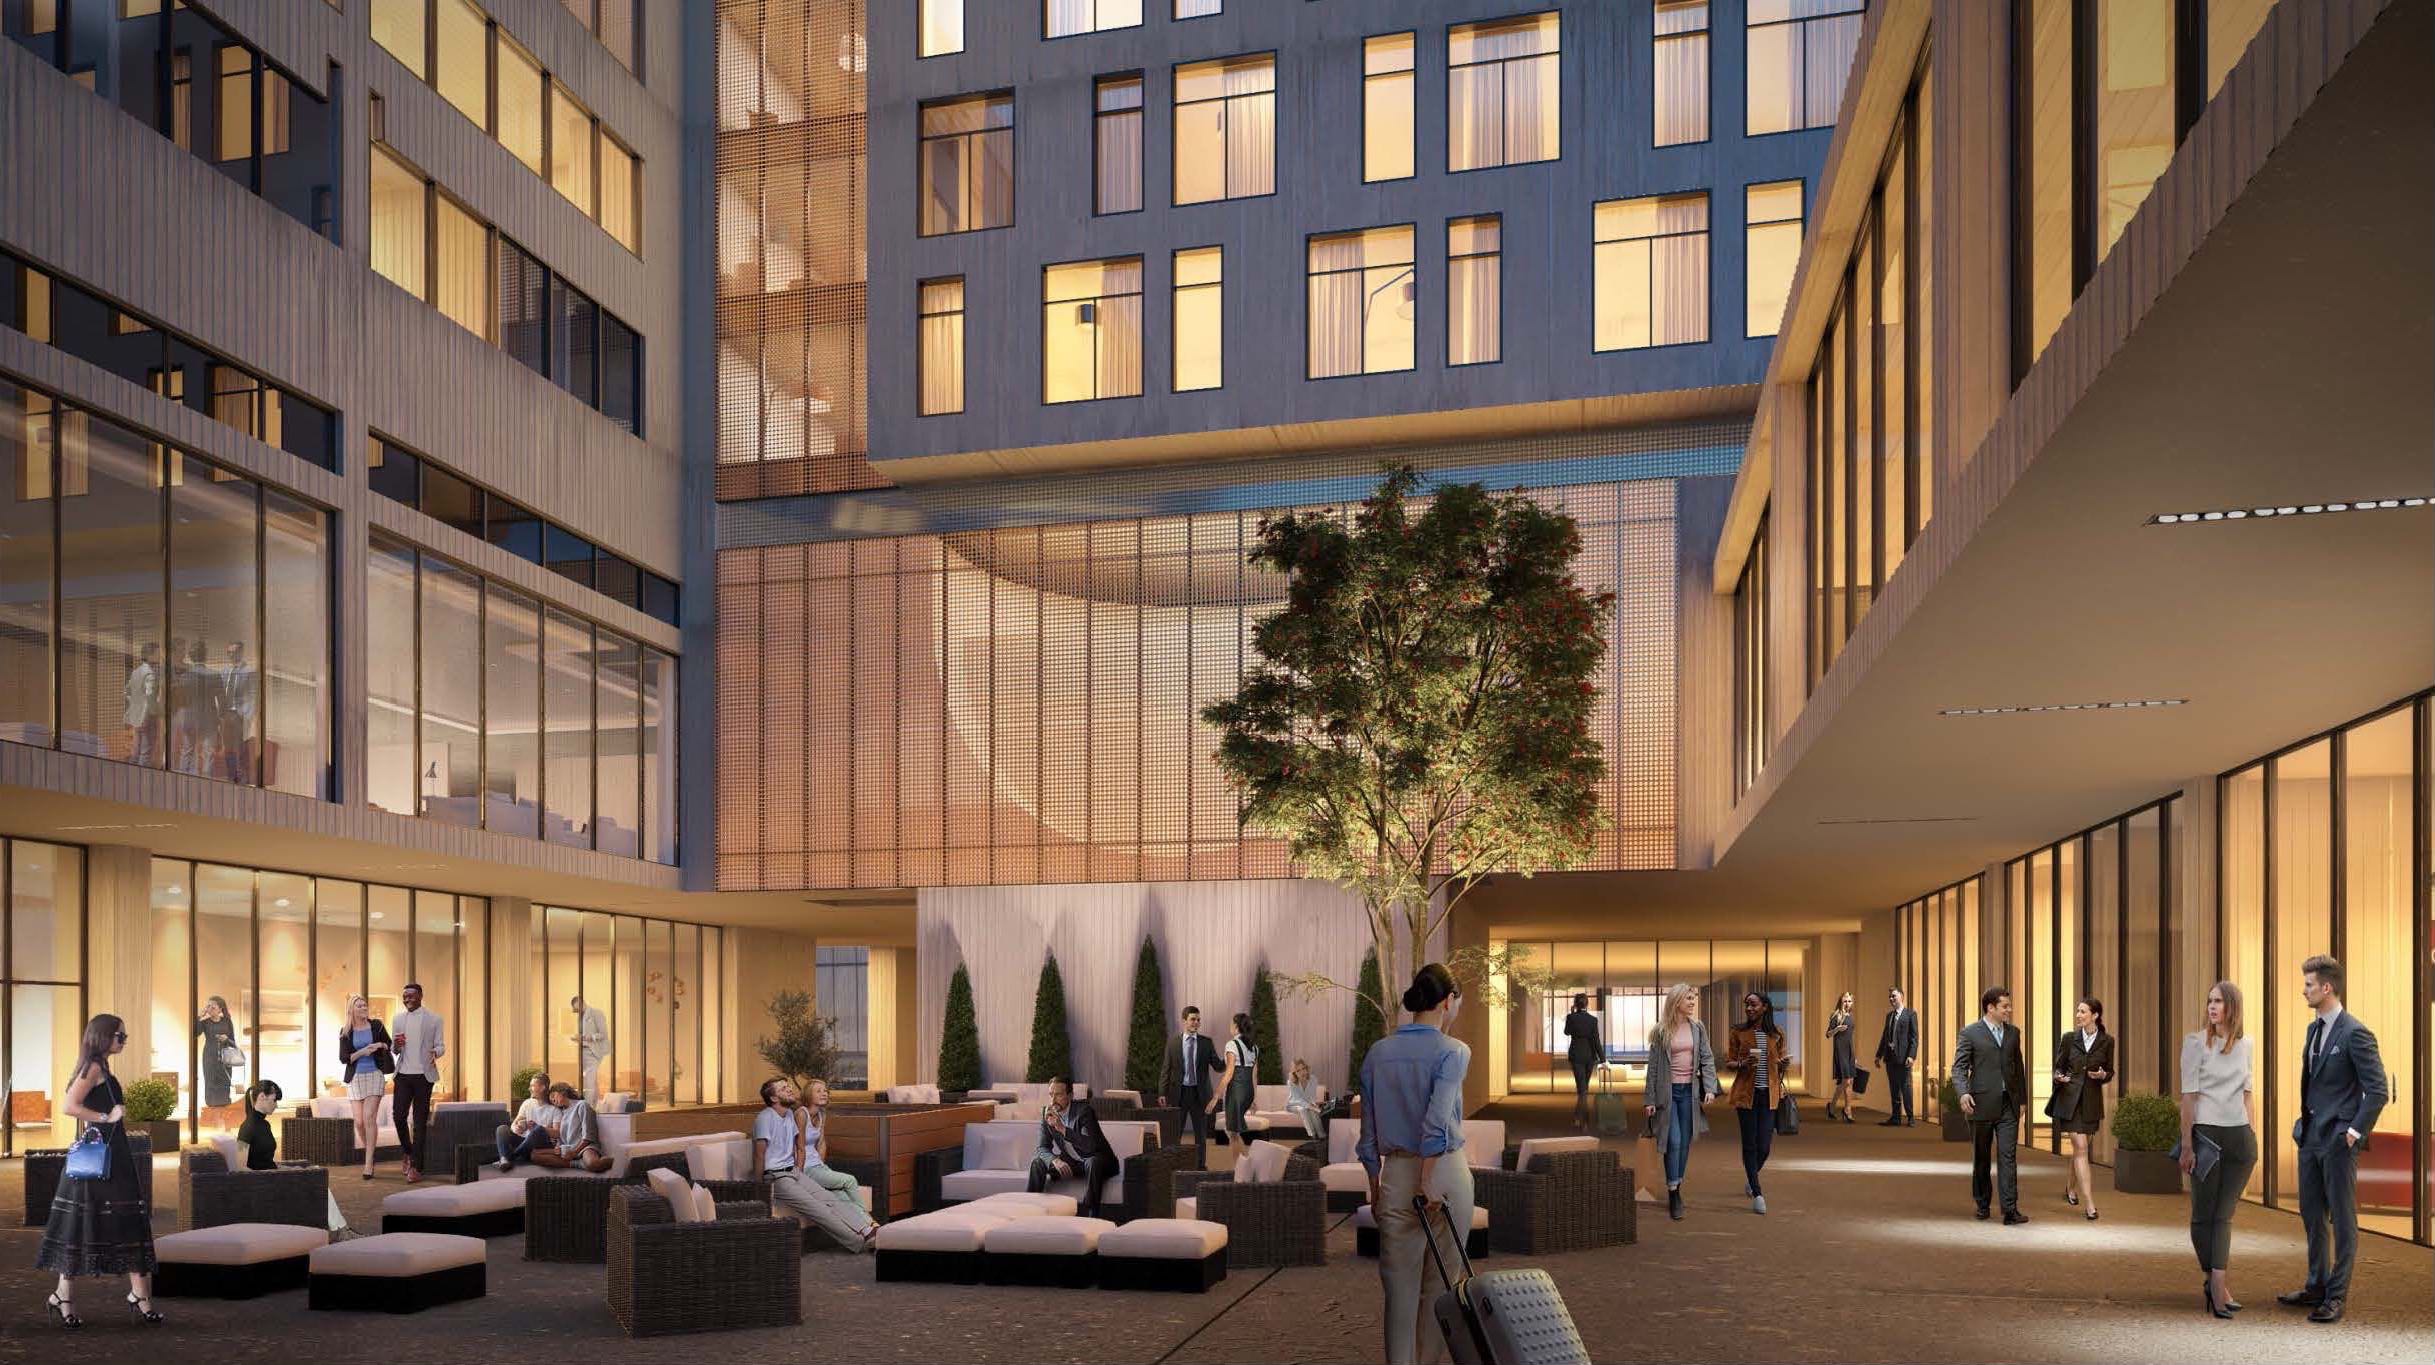 Hilton courtyard; preliminary conceptual rendering/MAQE